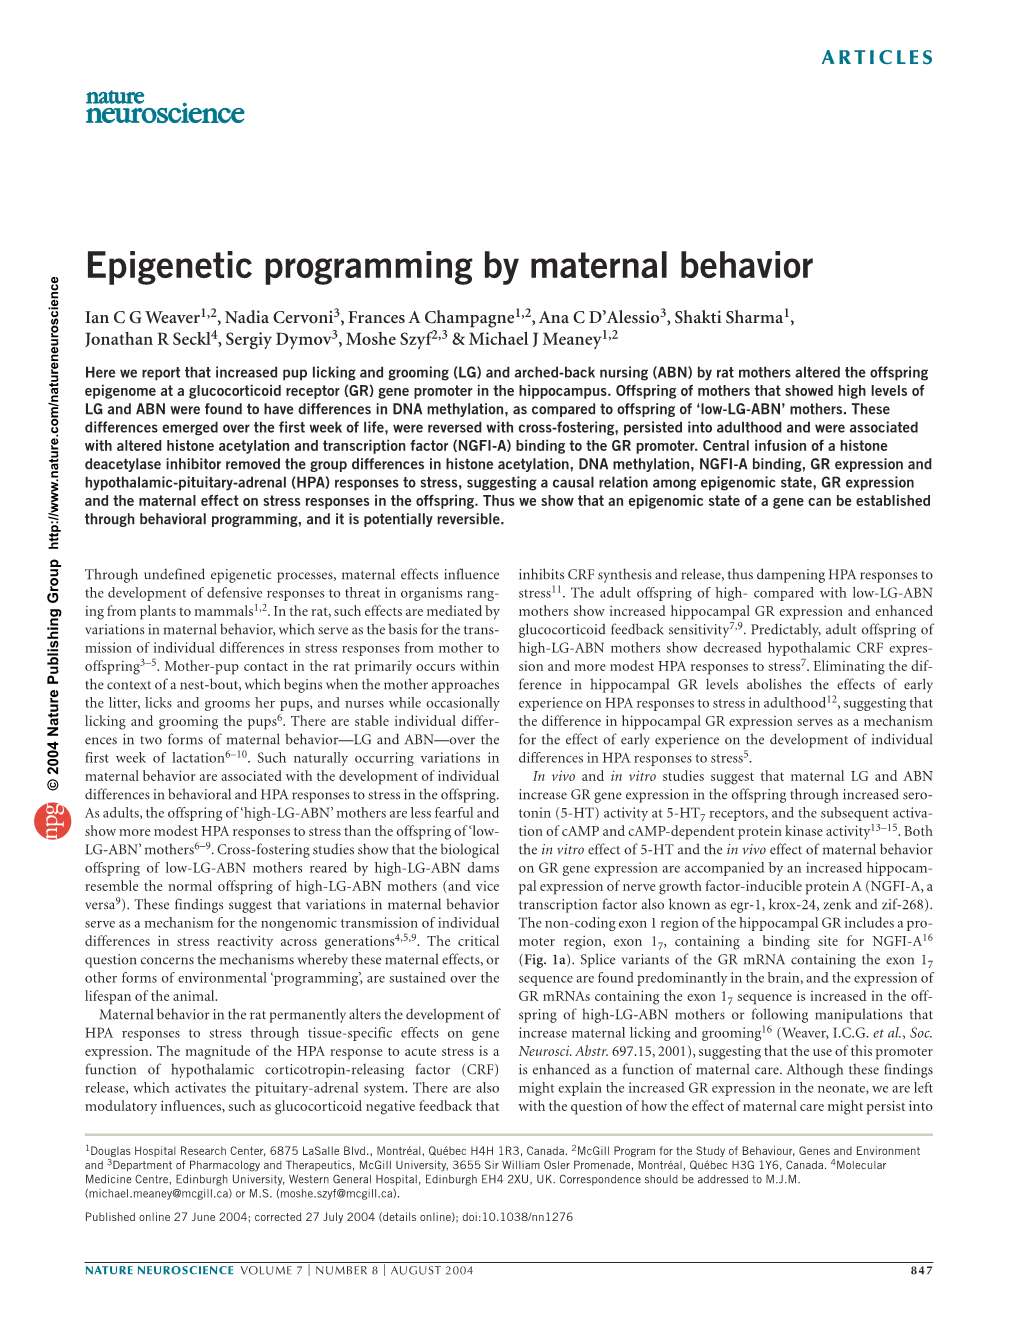 Epigenetic Programming by Maternal Behavior